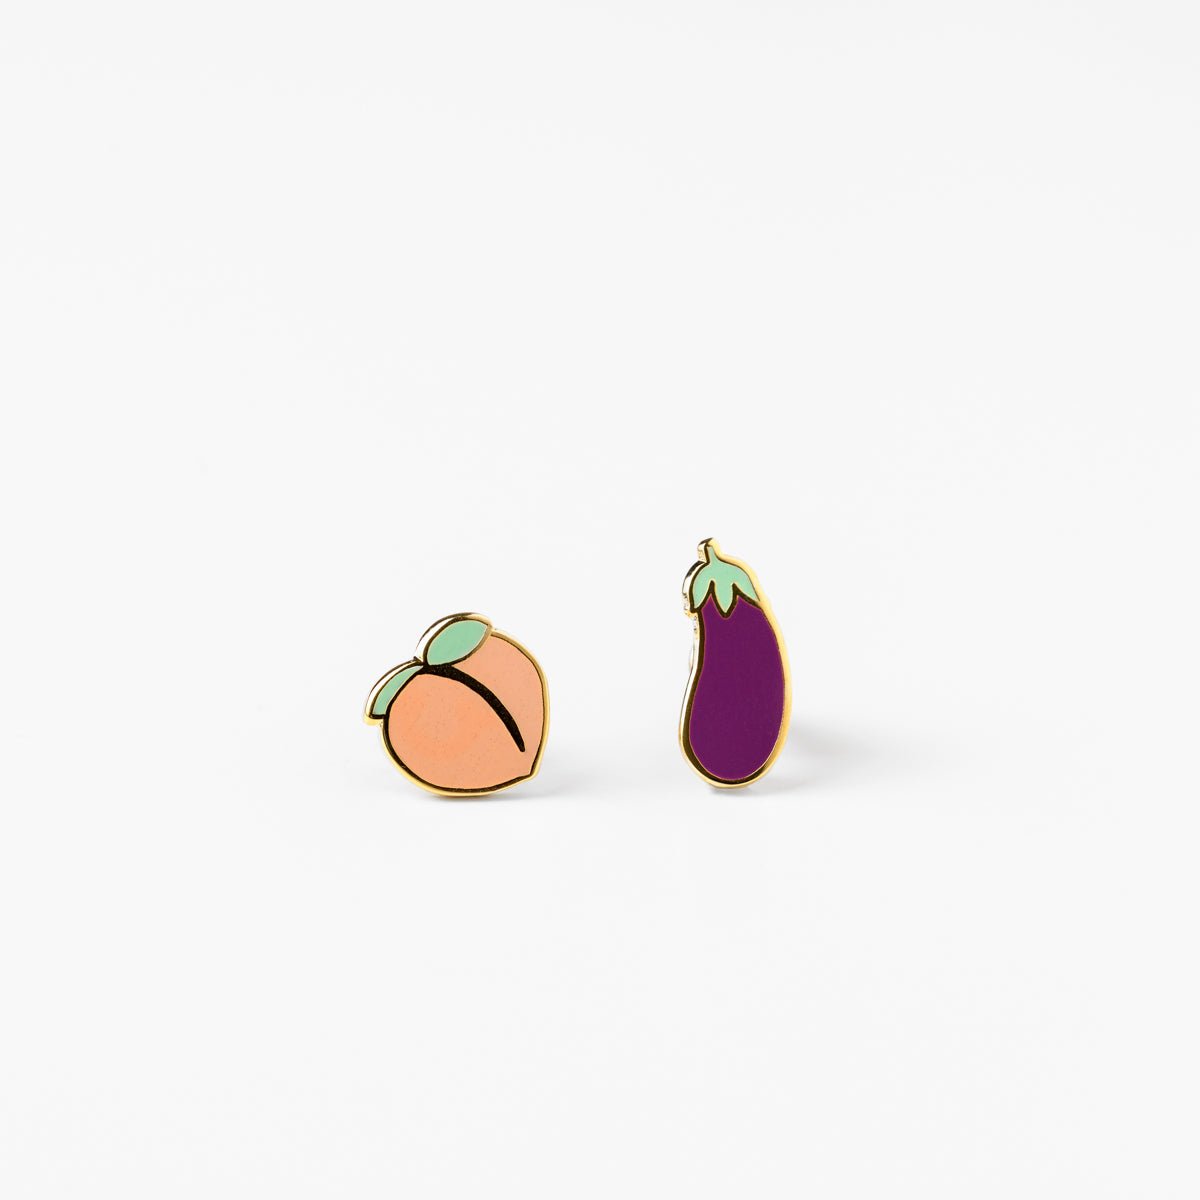 Peach &amp; Eggplant Earrings - Yellow Owl Workshop